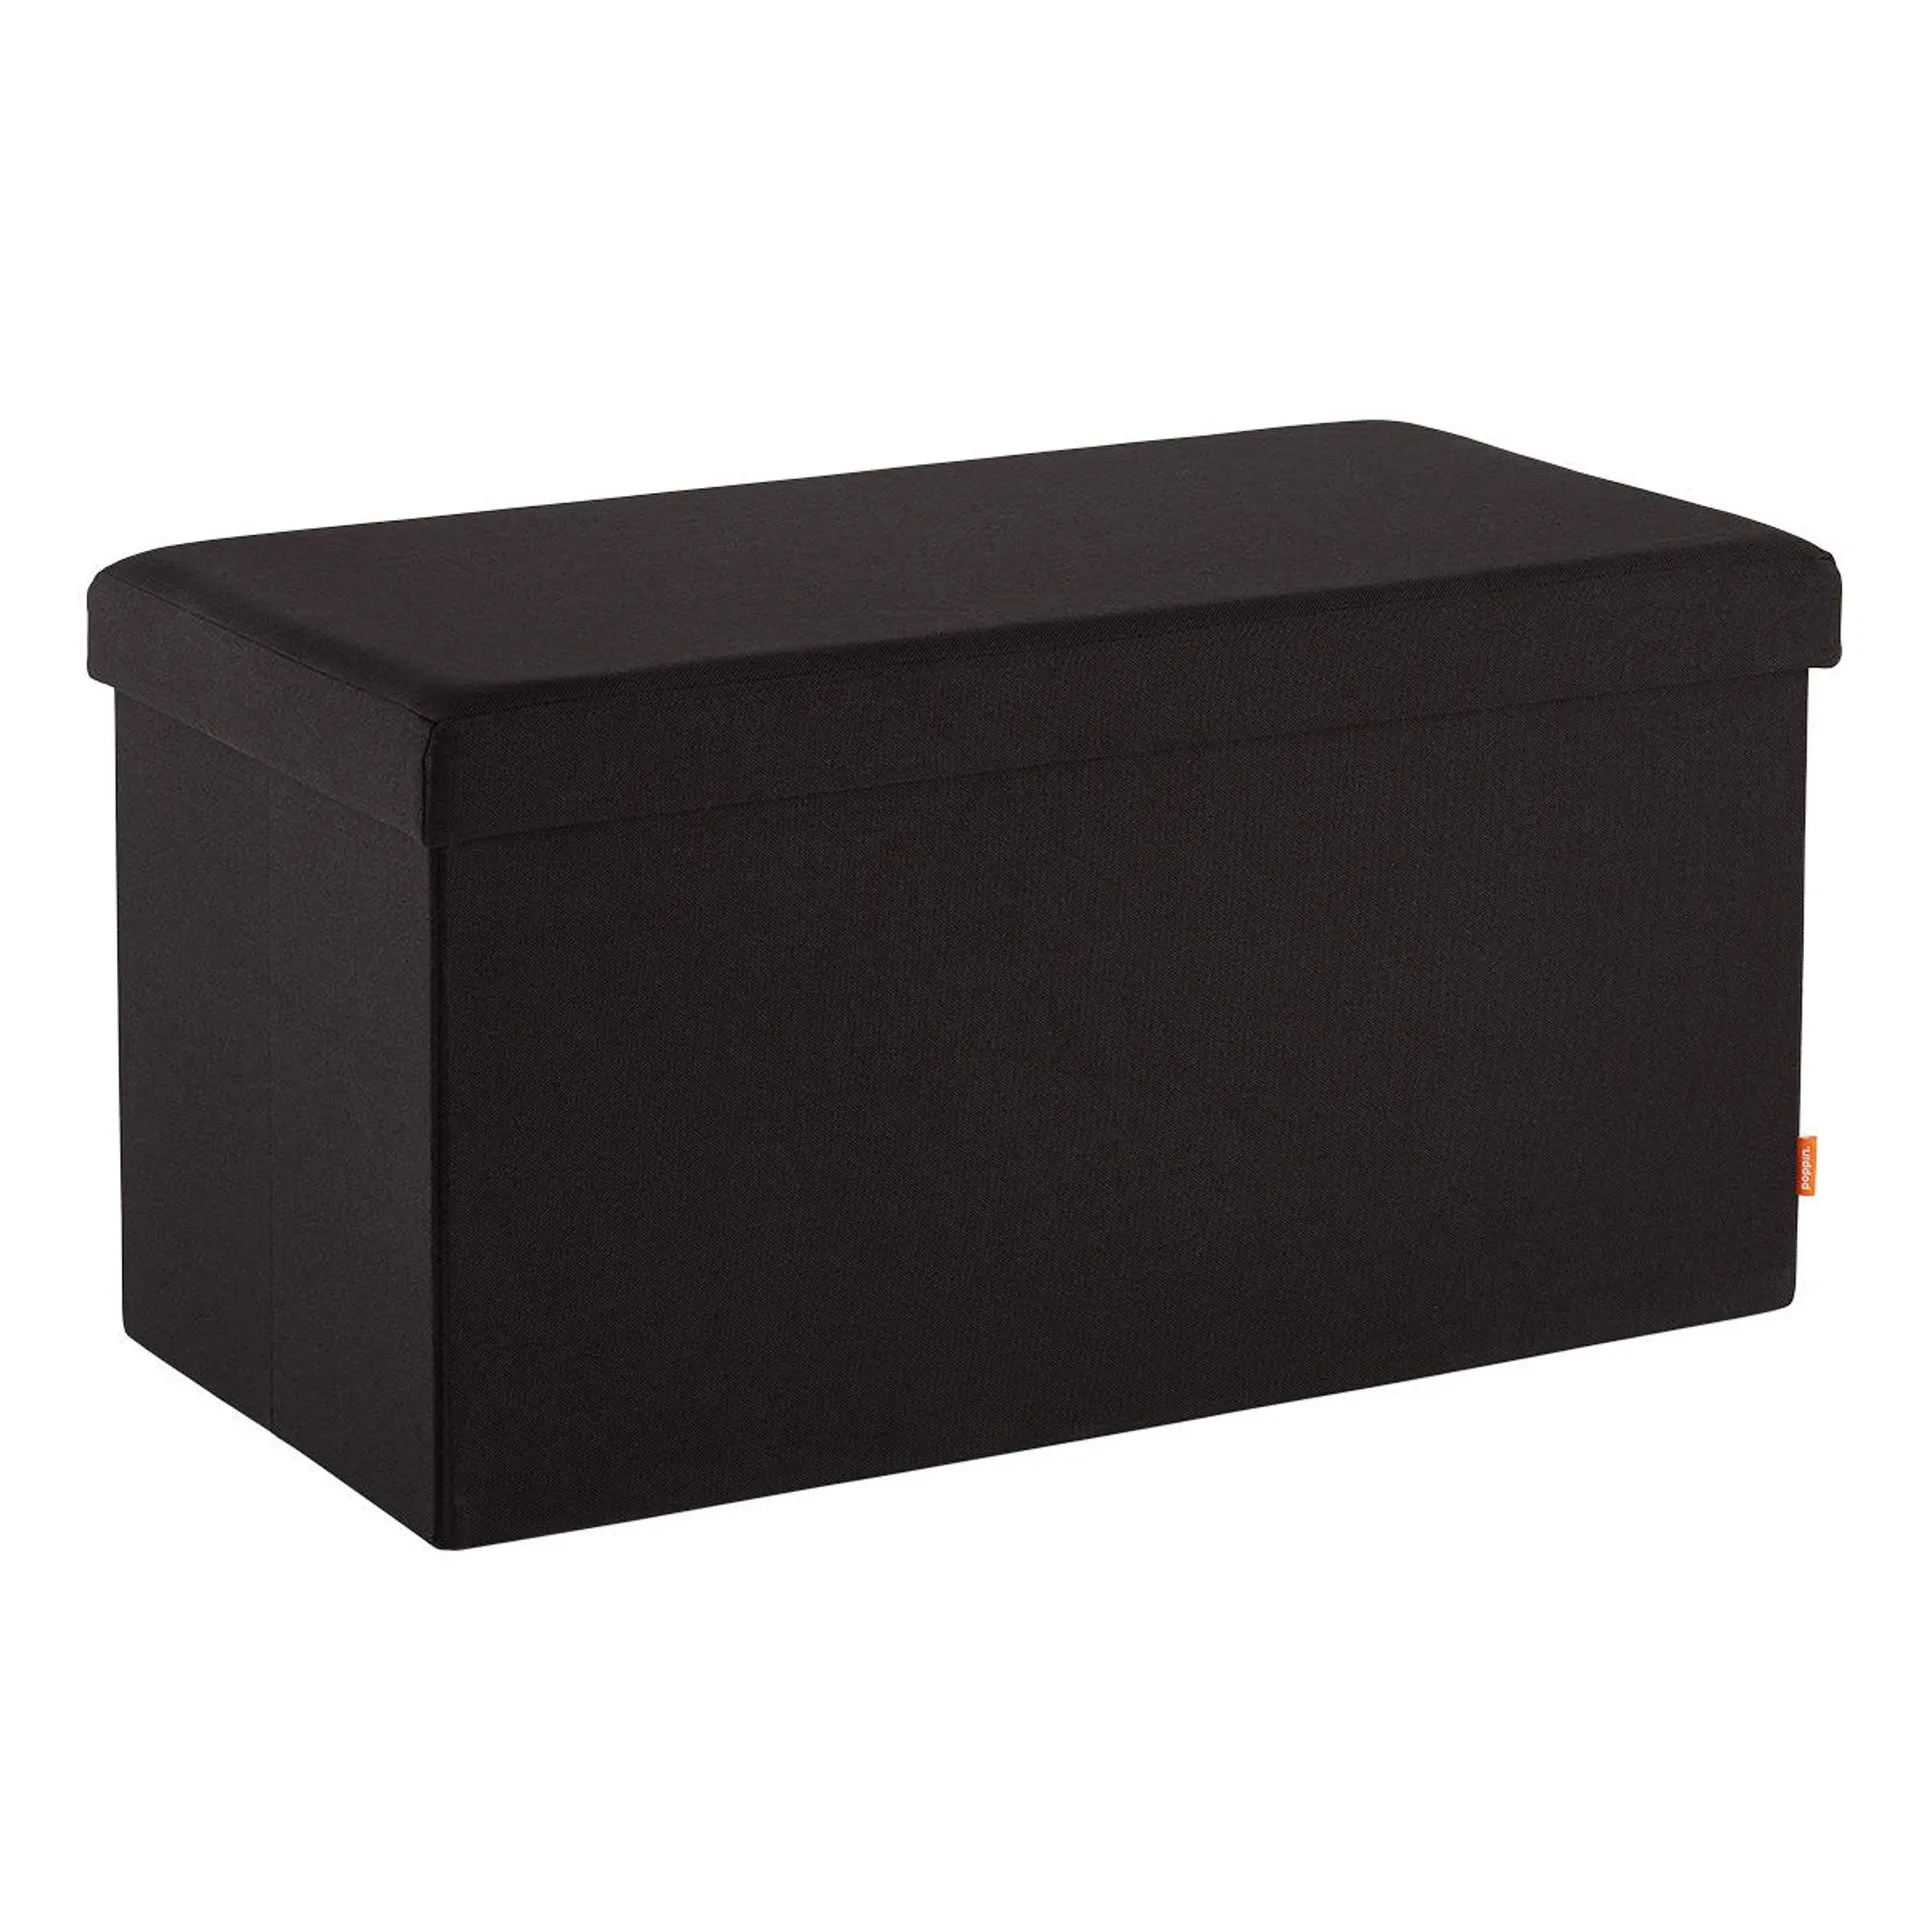 Poppin Box Bench Black